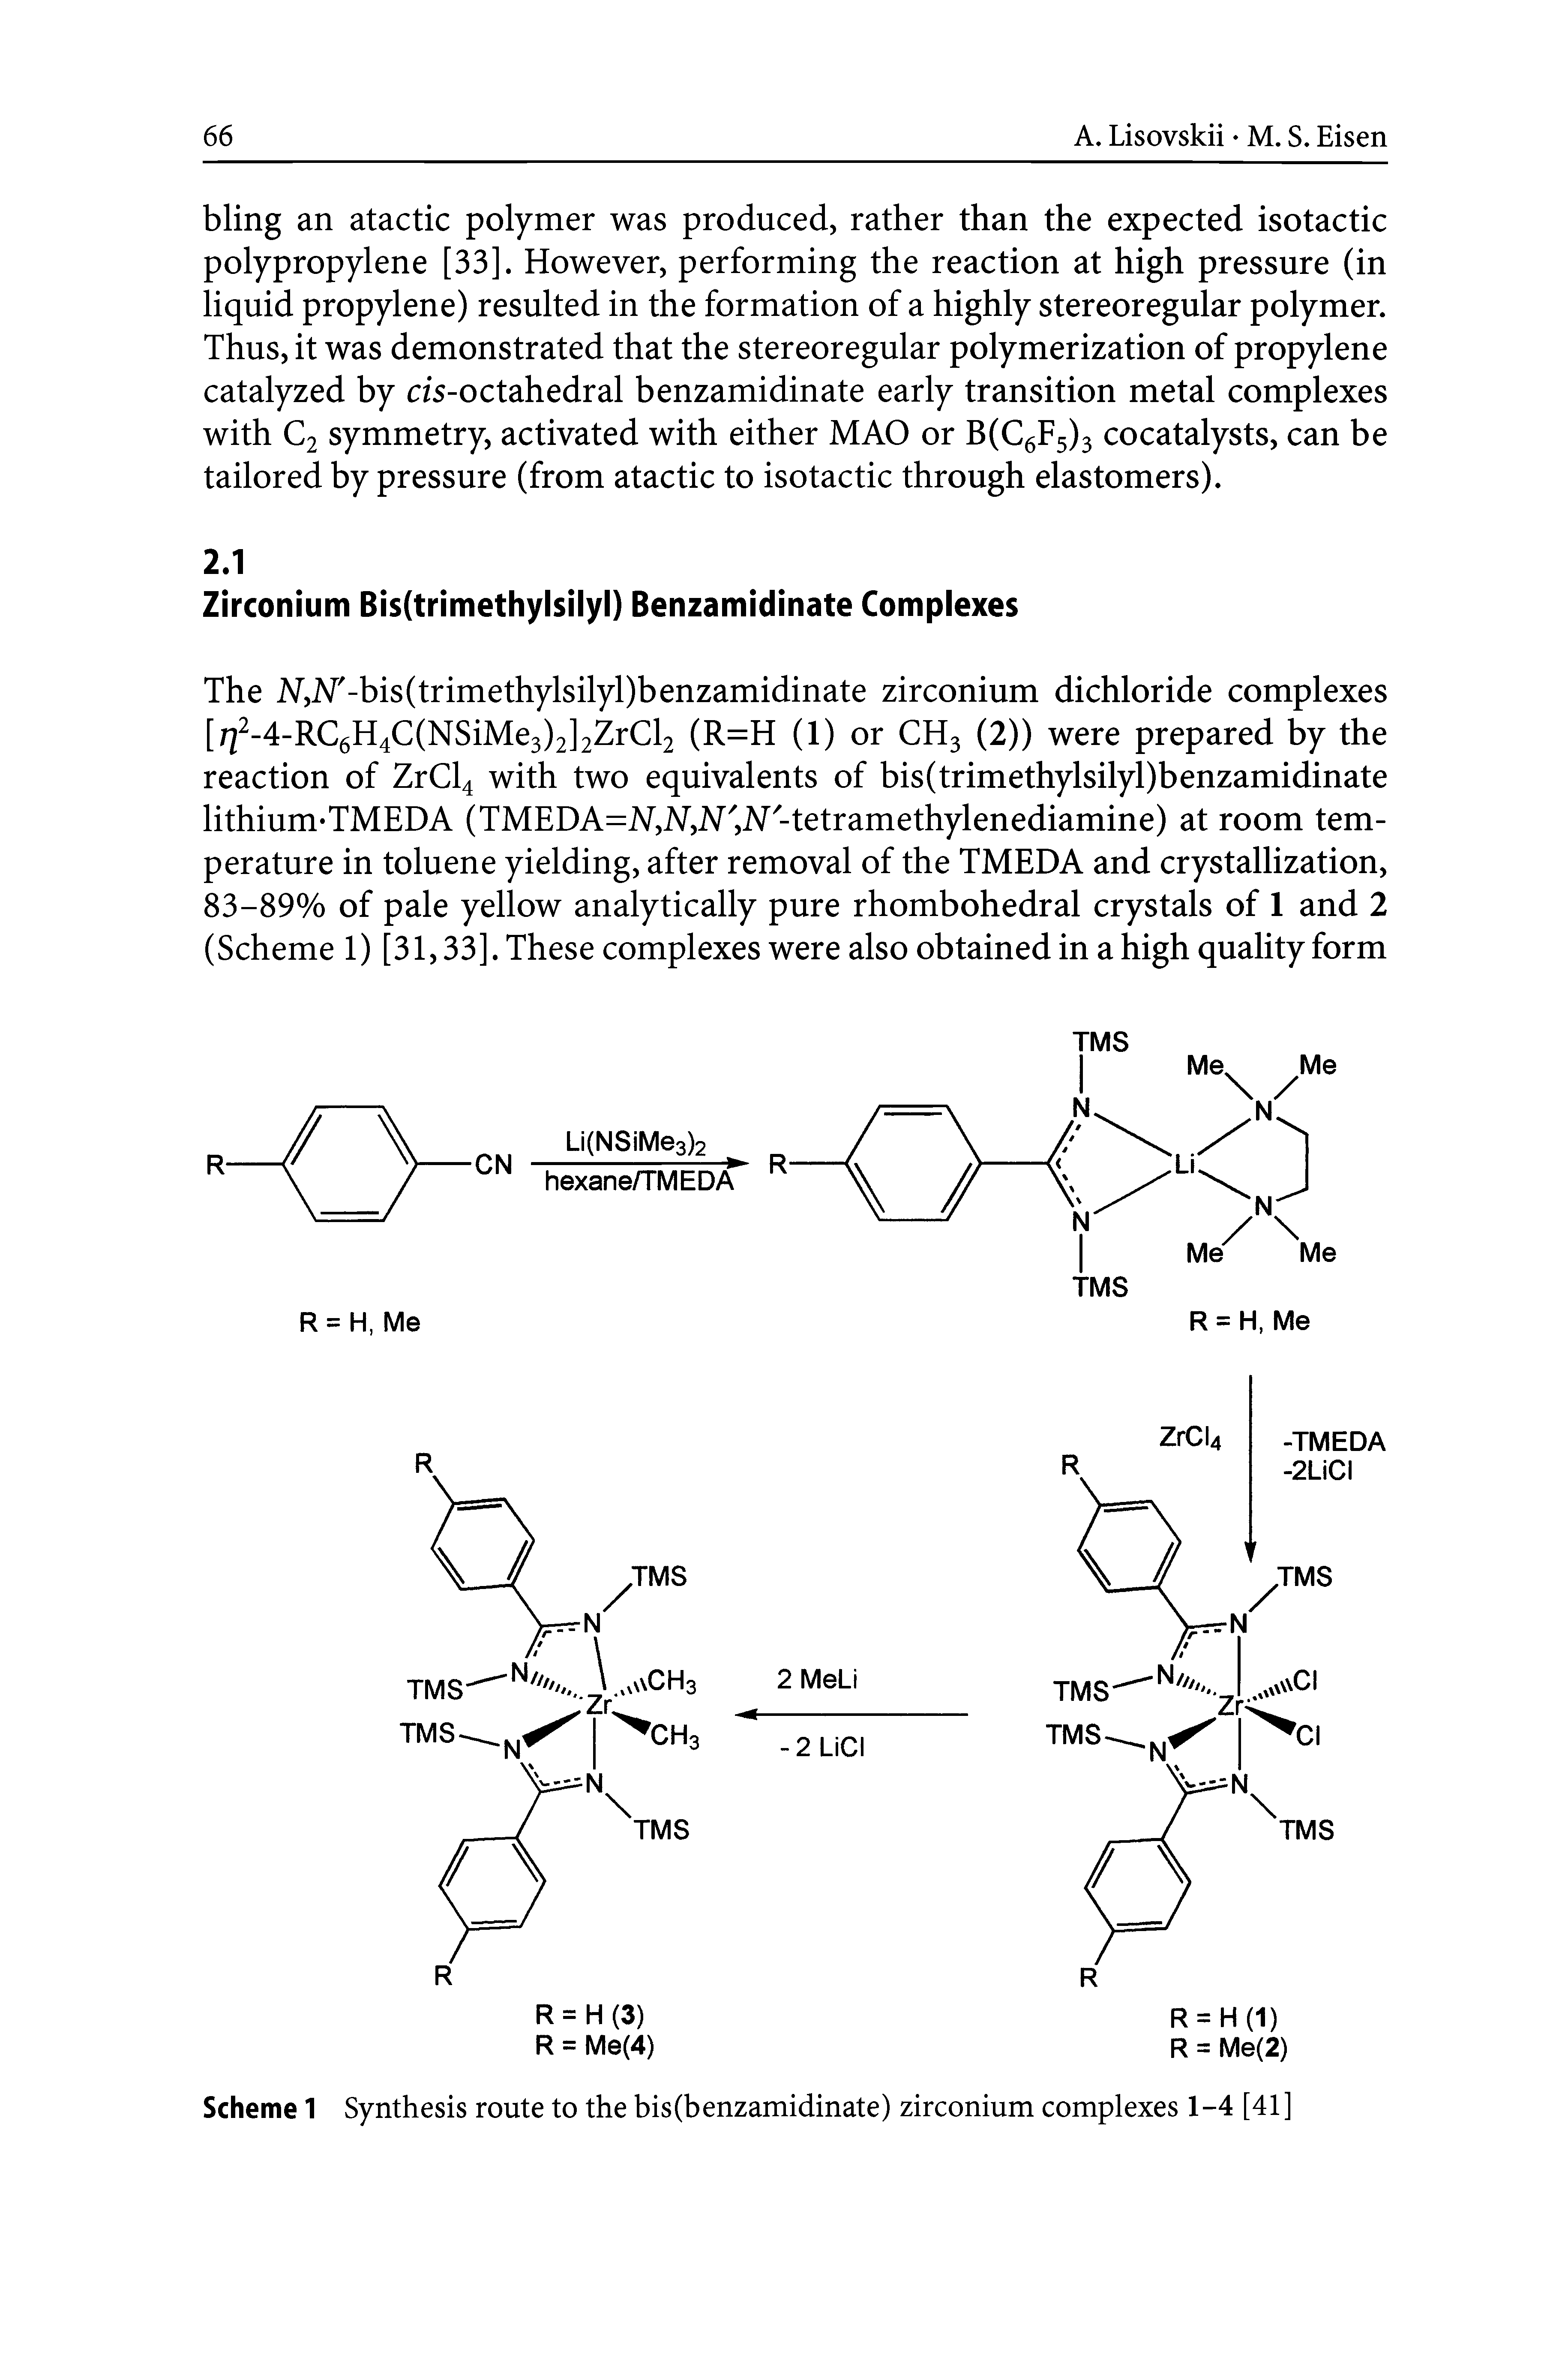 Scheme 1 Synthesis route to the bis(benzamidinate) zirconium complexes 1-4 [41]...